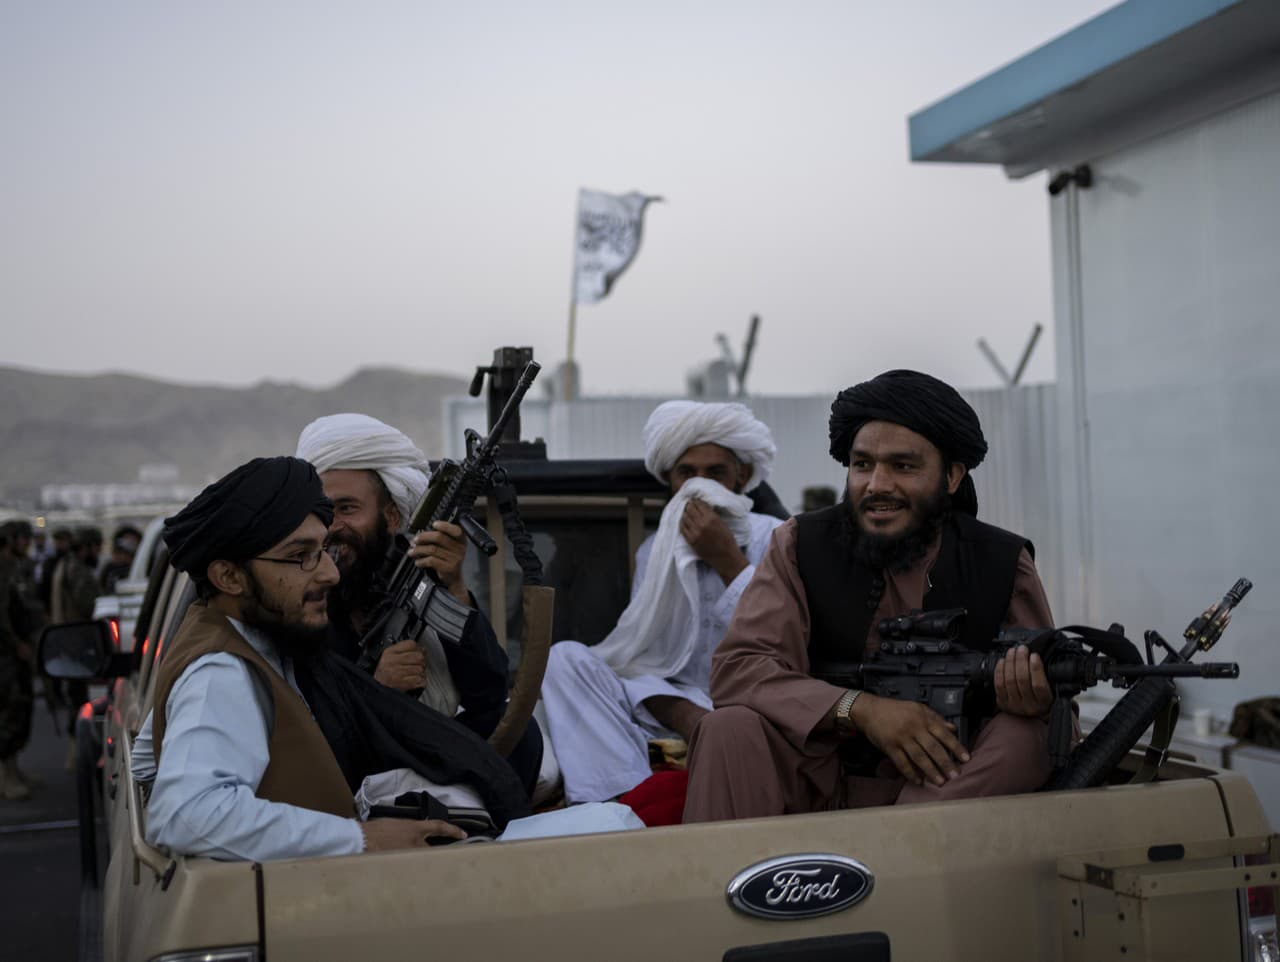 Bojovníci Talibanu